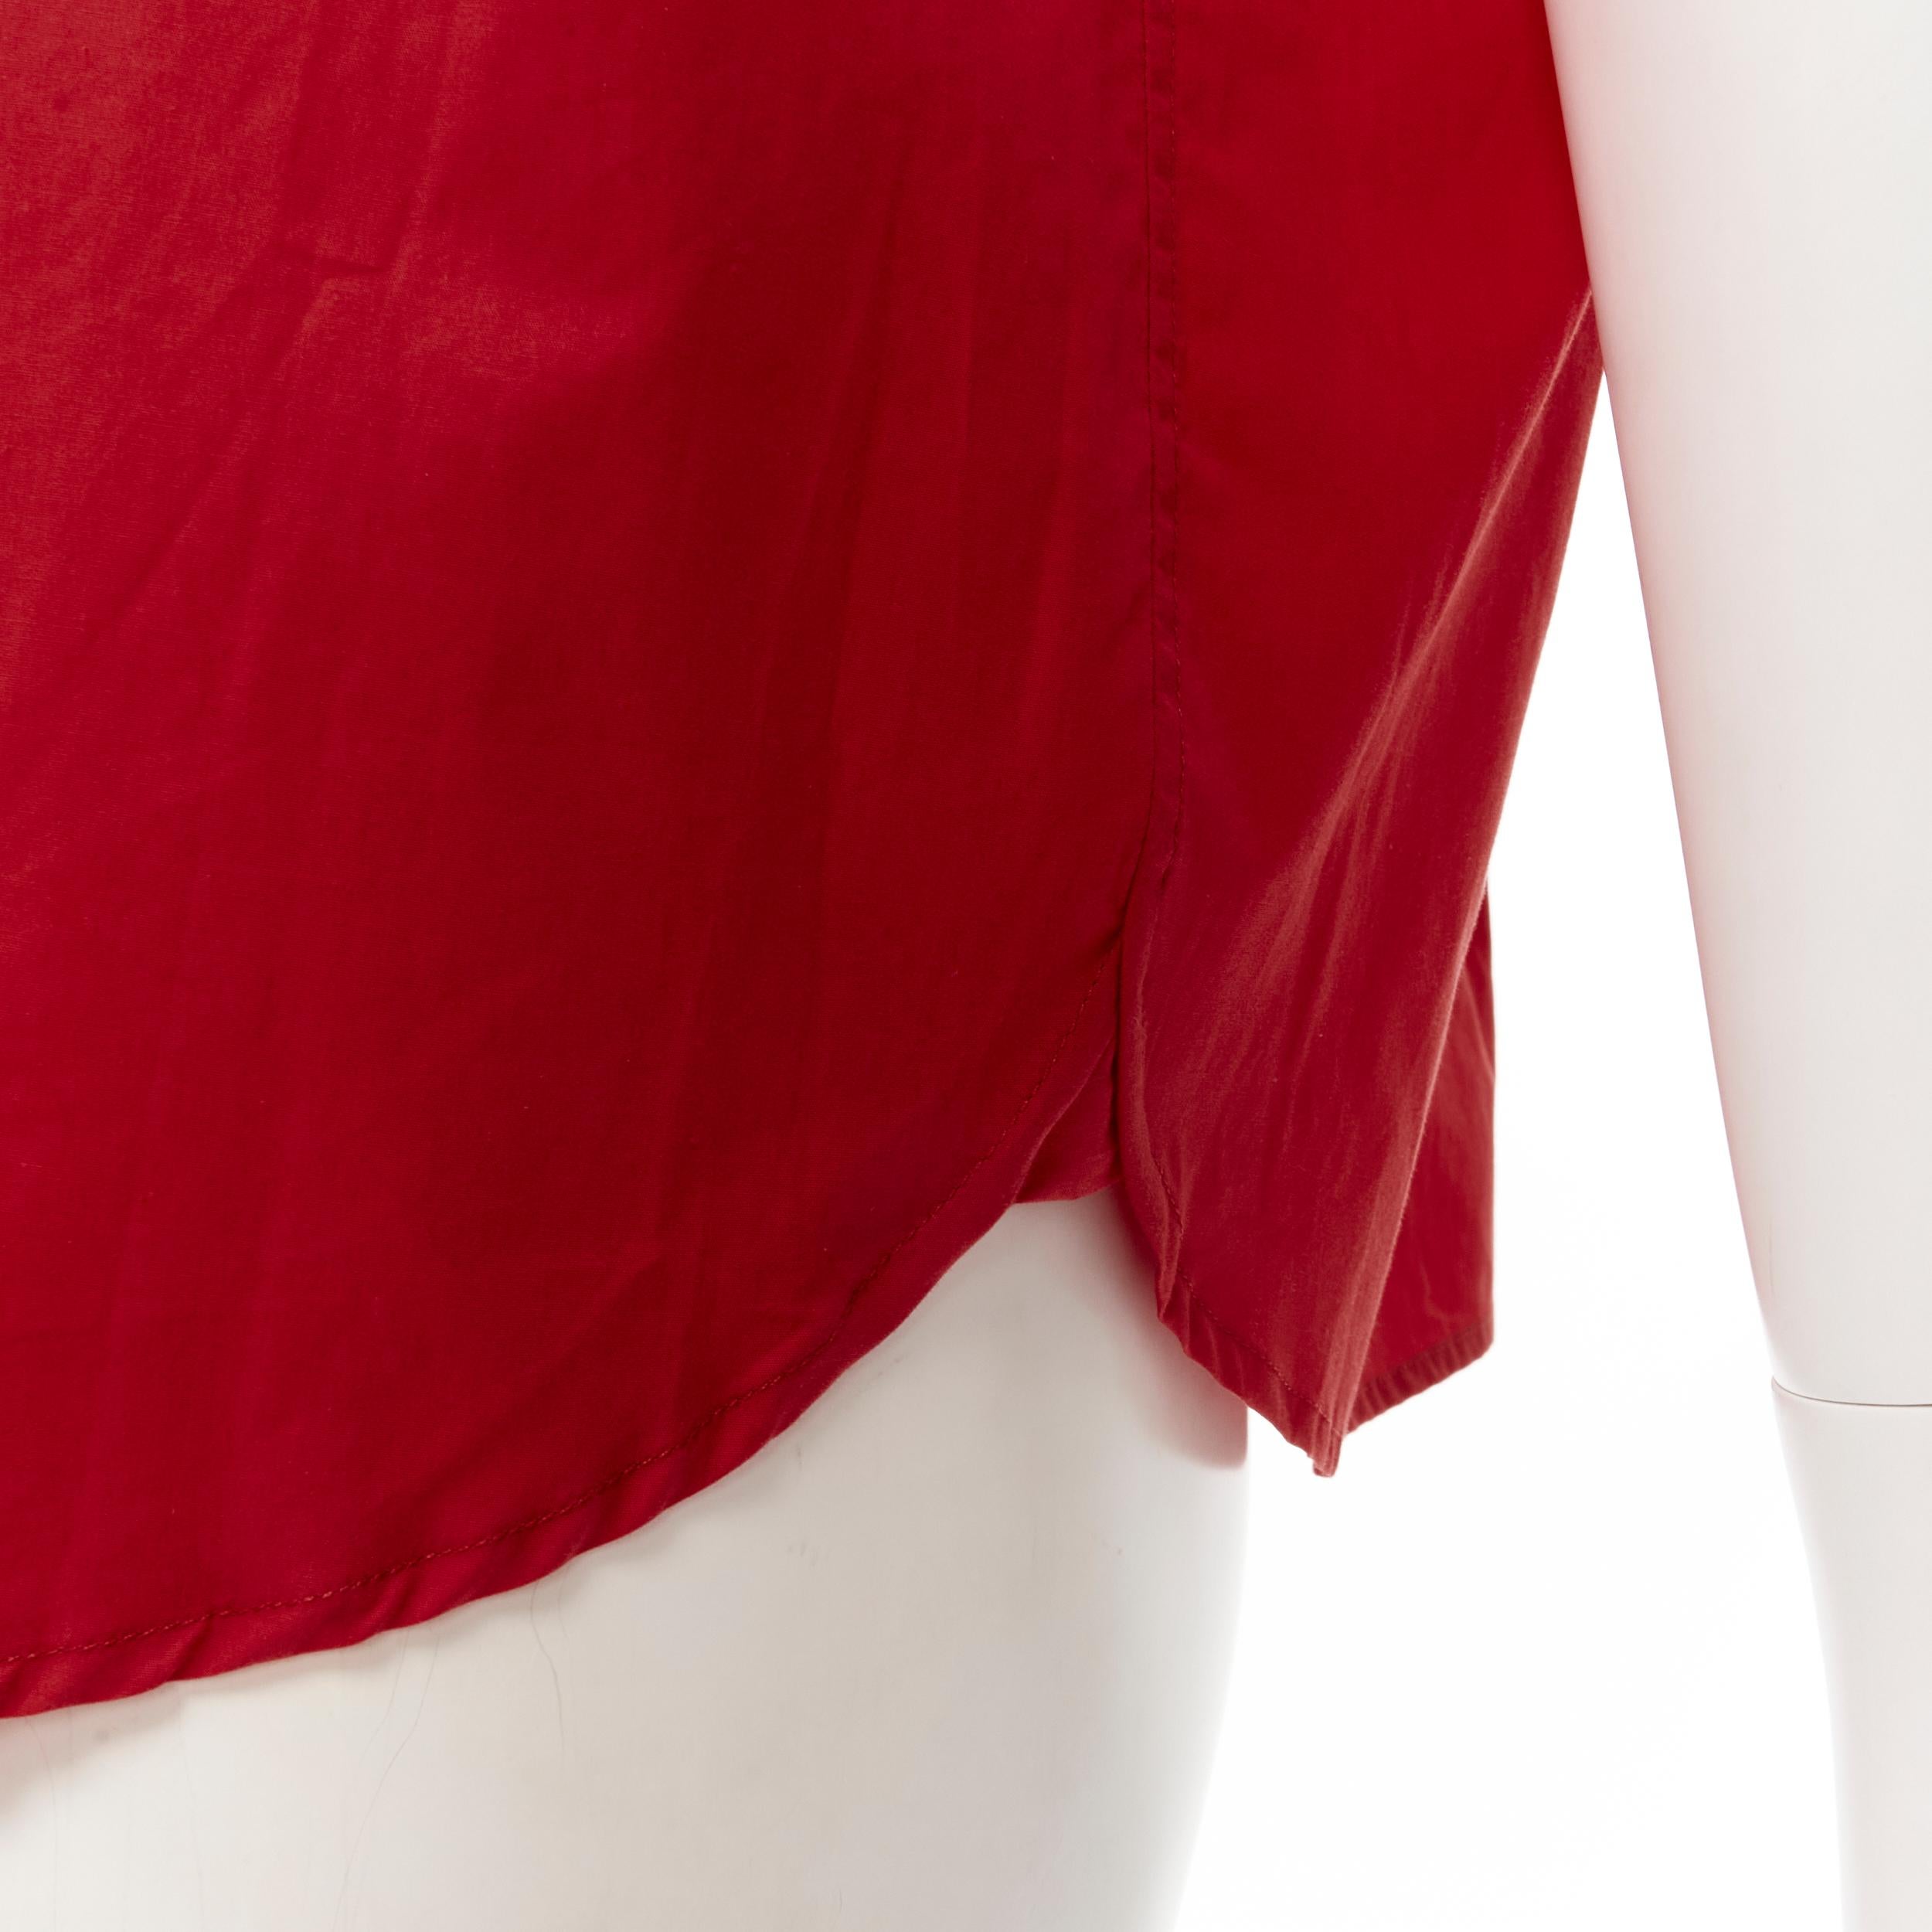 PRADA red contrast black collar boxy sleeveless vest shirt S For Sale 1